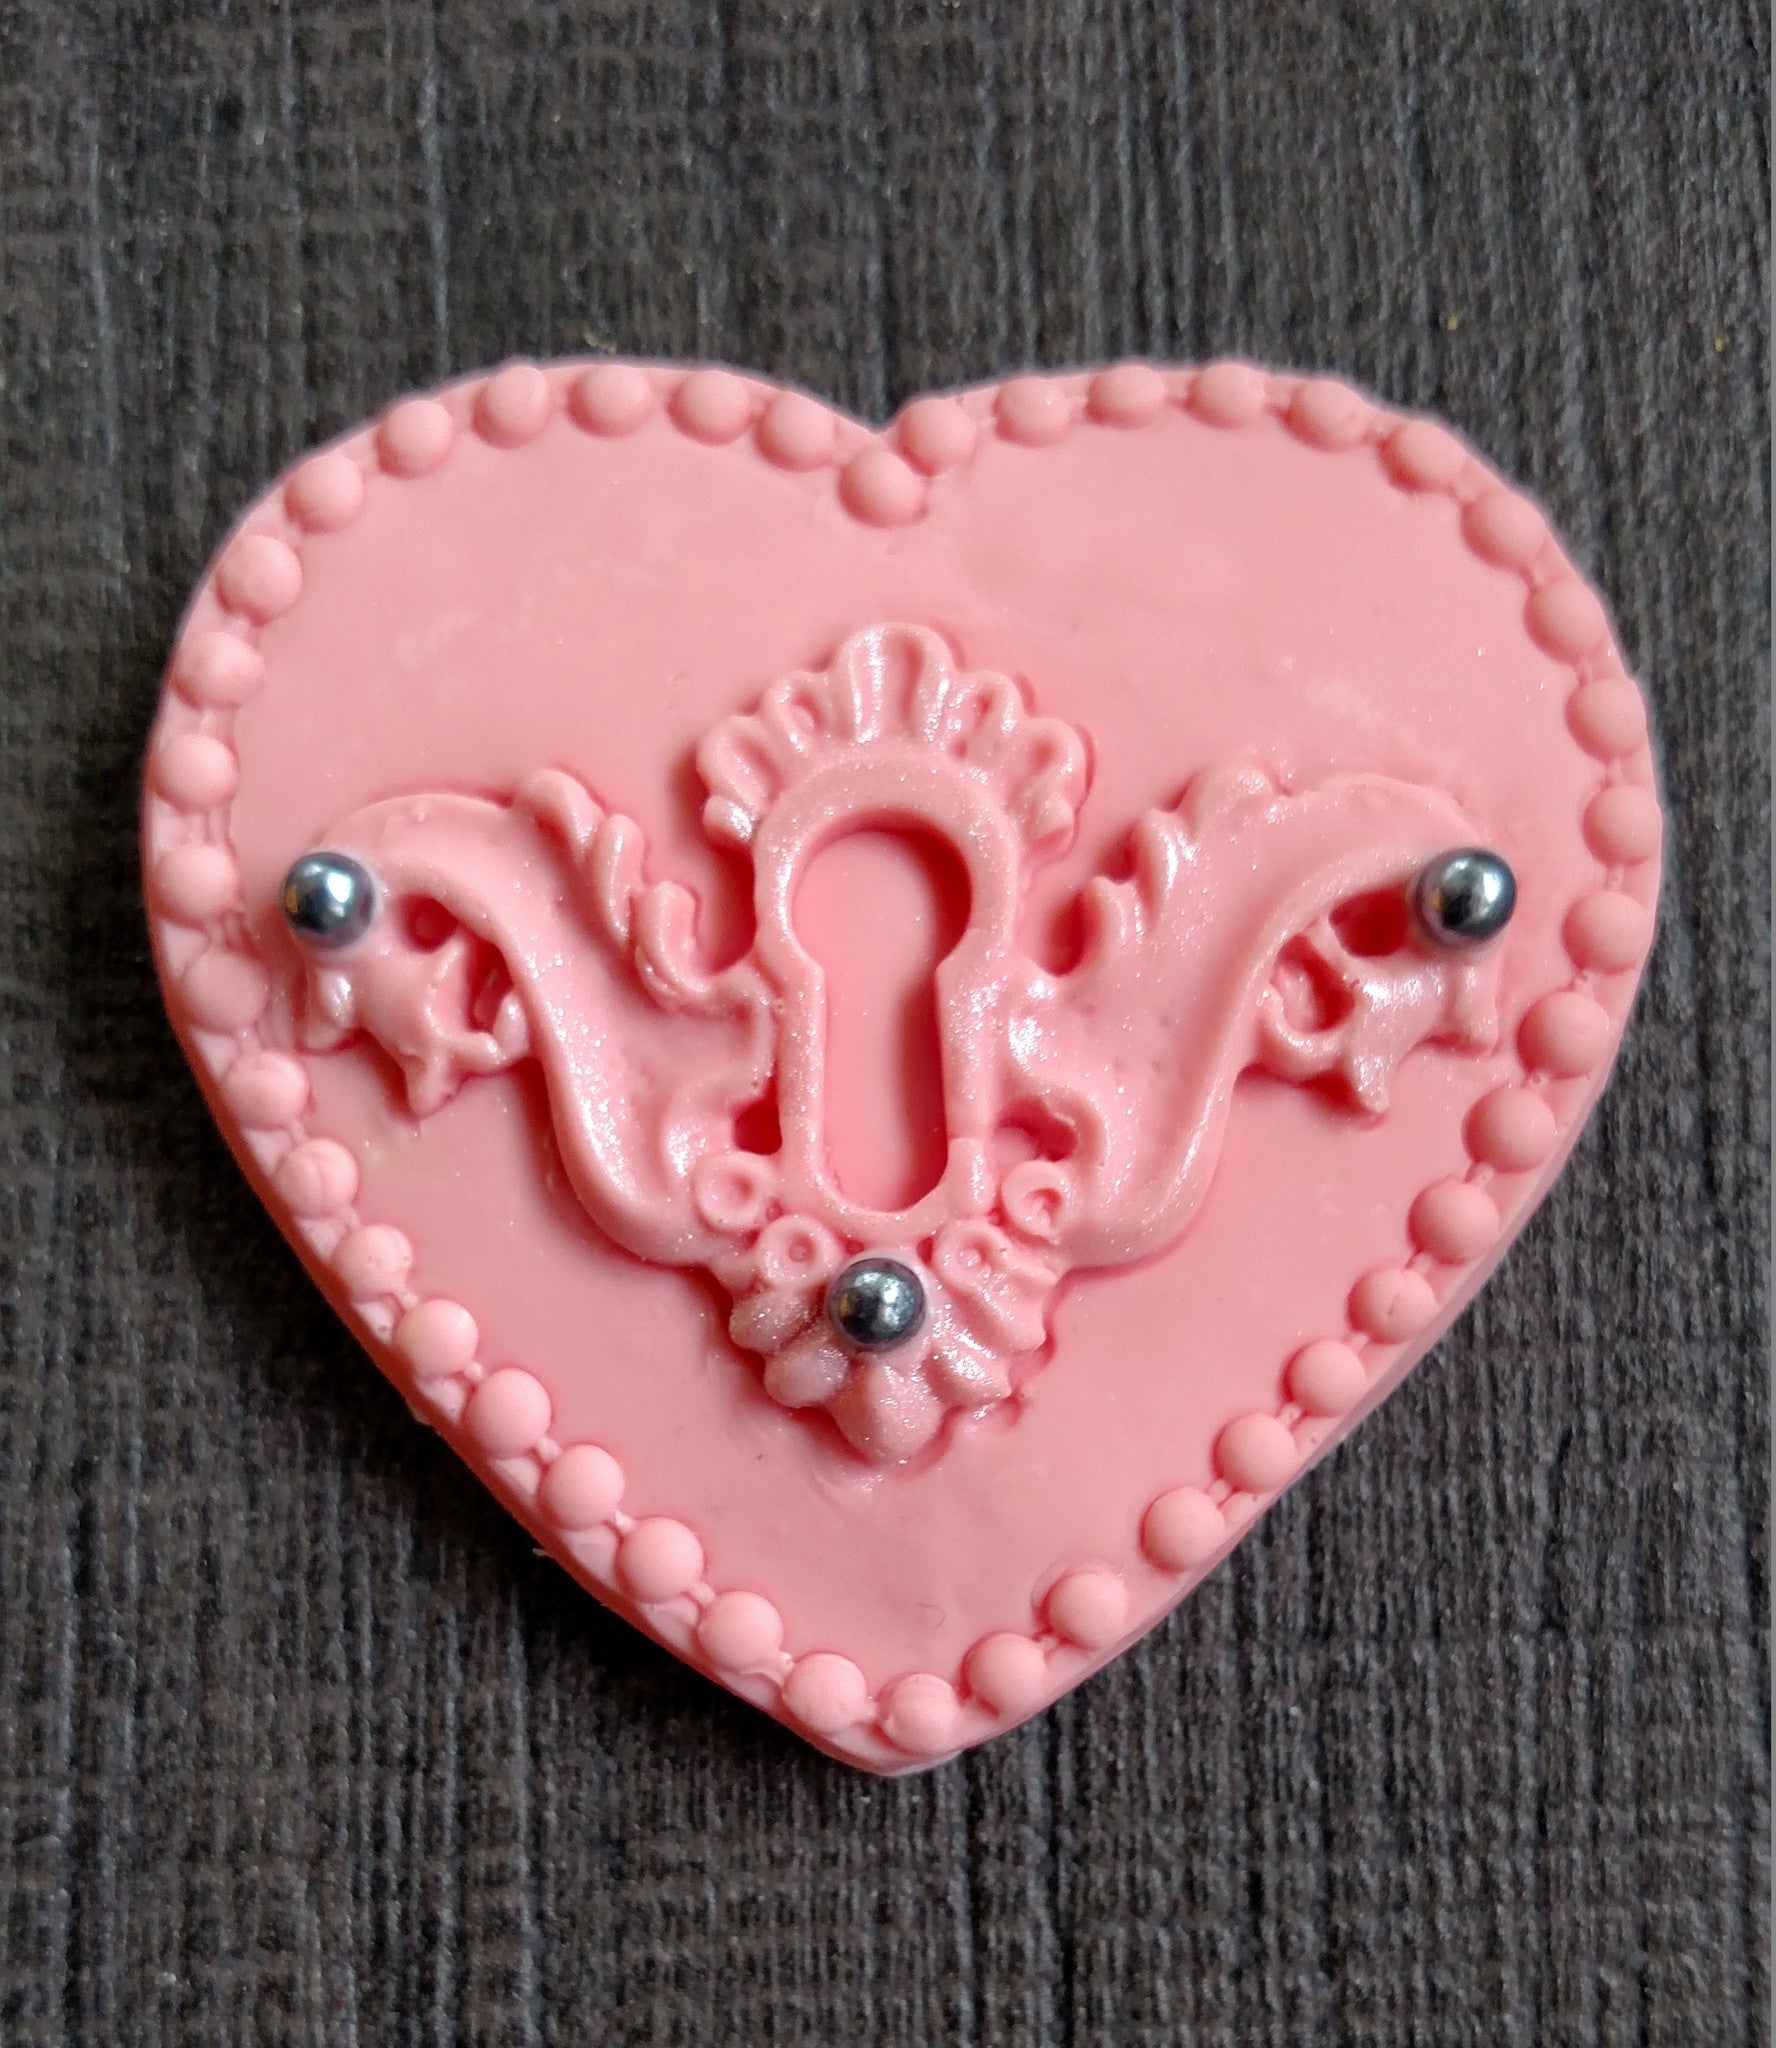 Heart Lock Cookie Mold - Artesão Unique & Custom Cookie Molds